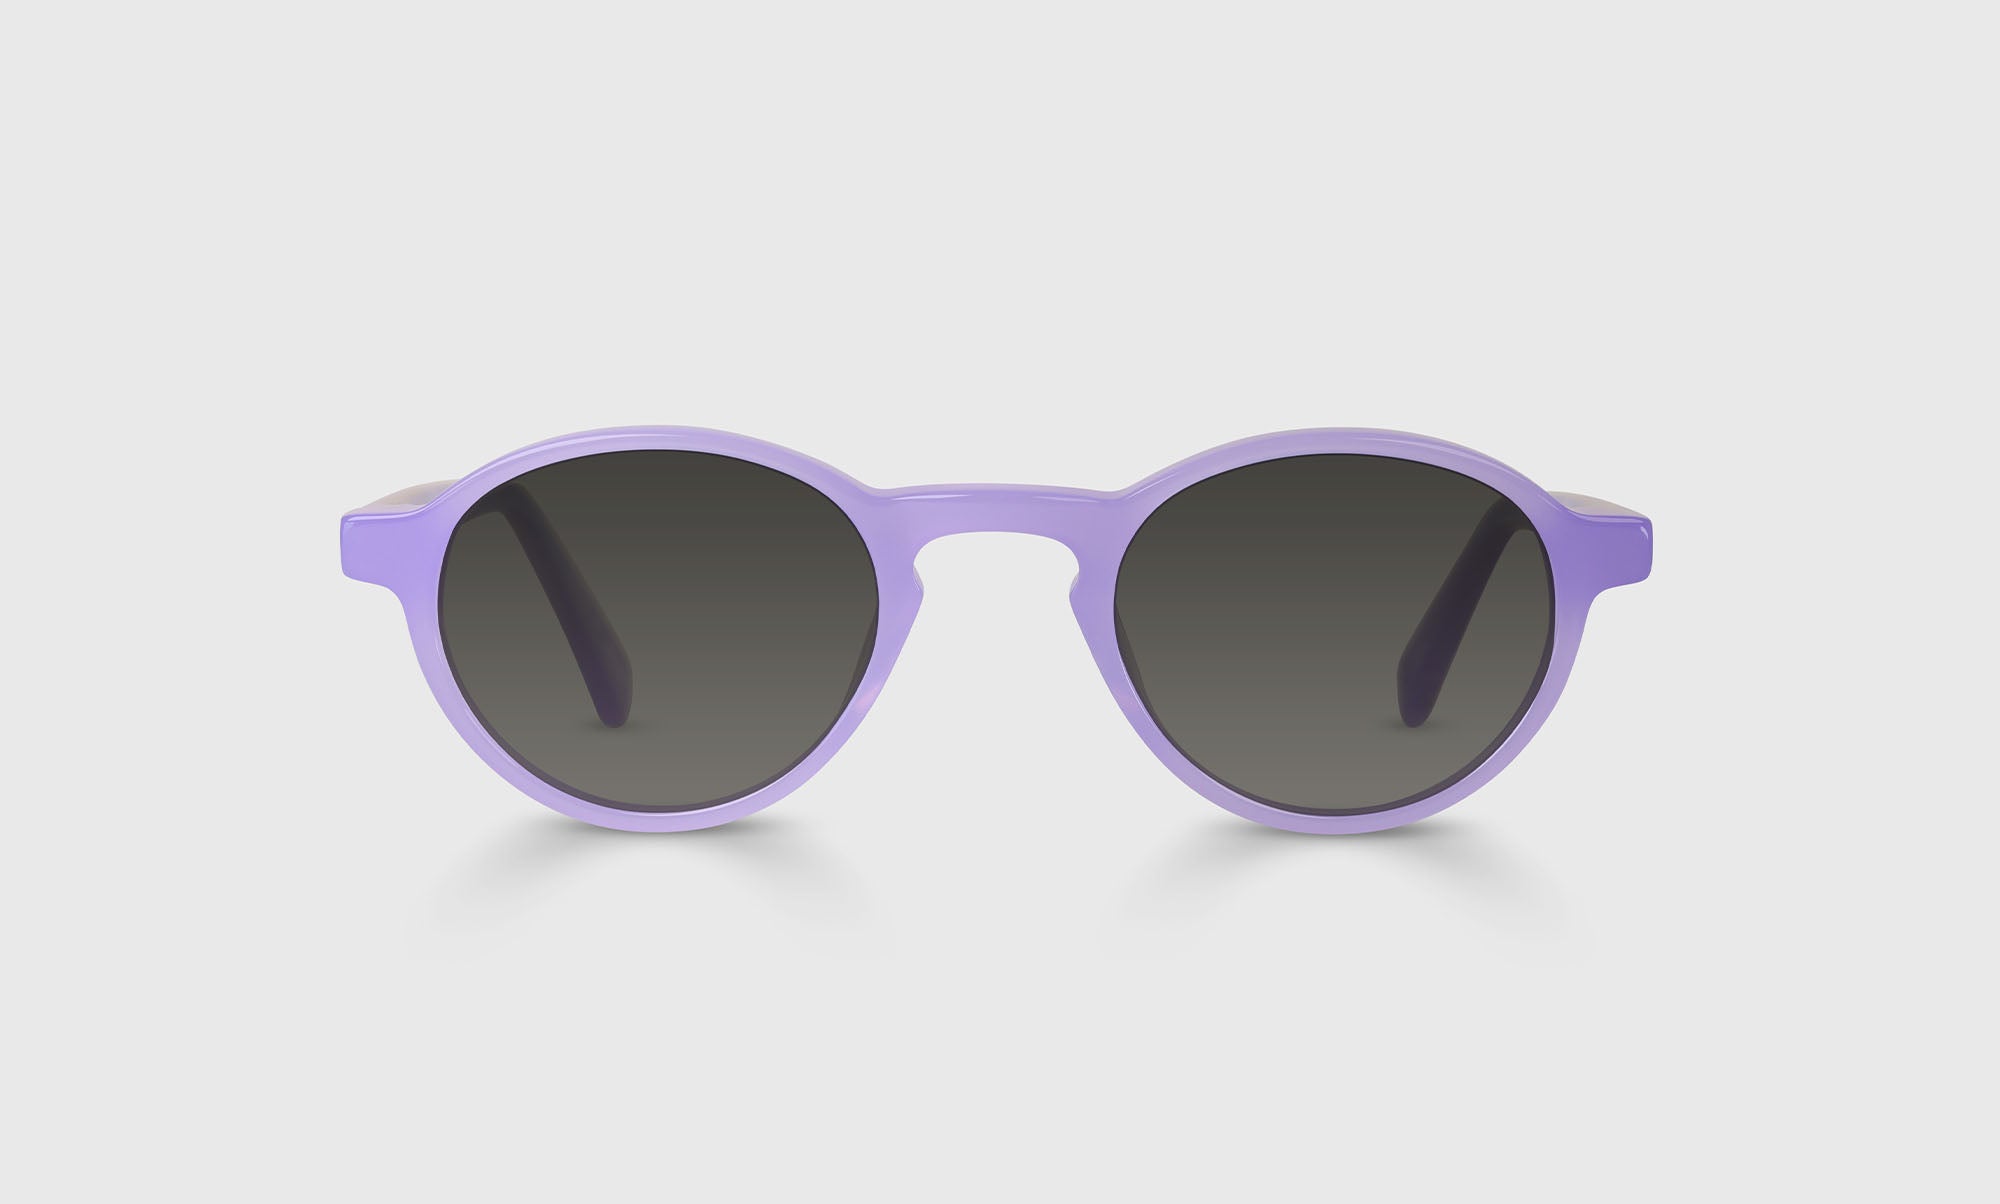 22-pg | eyebobs Board Stiff, Narrow, Round, Reader Sunglasses, Polarized Grey